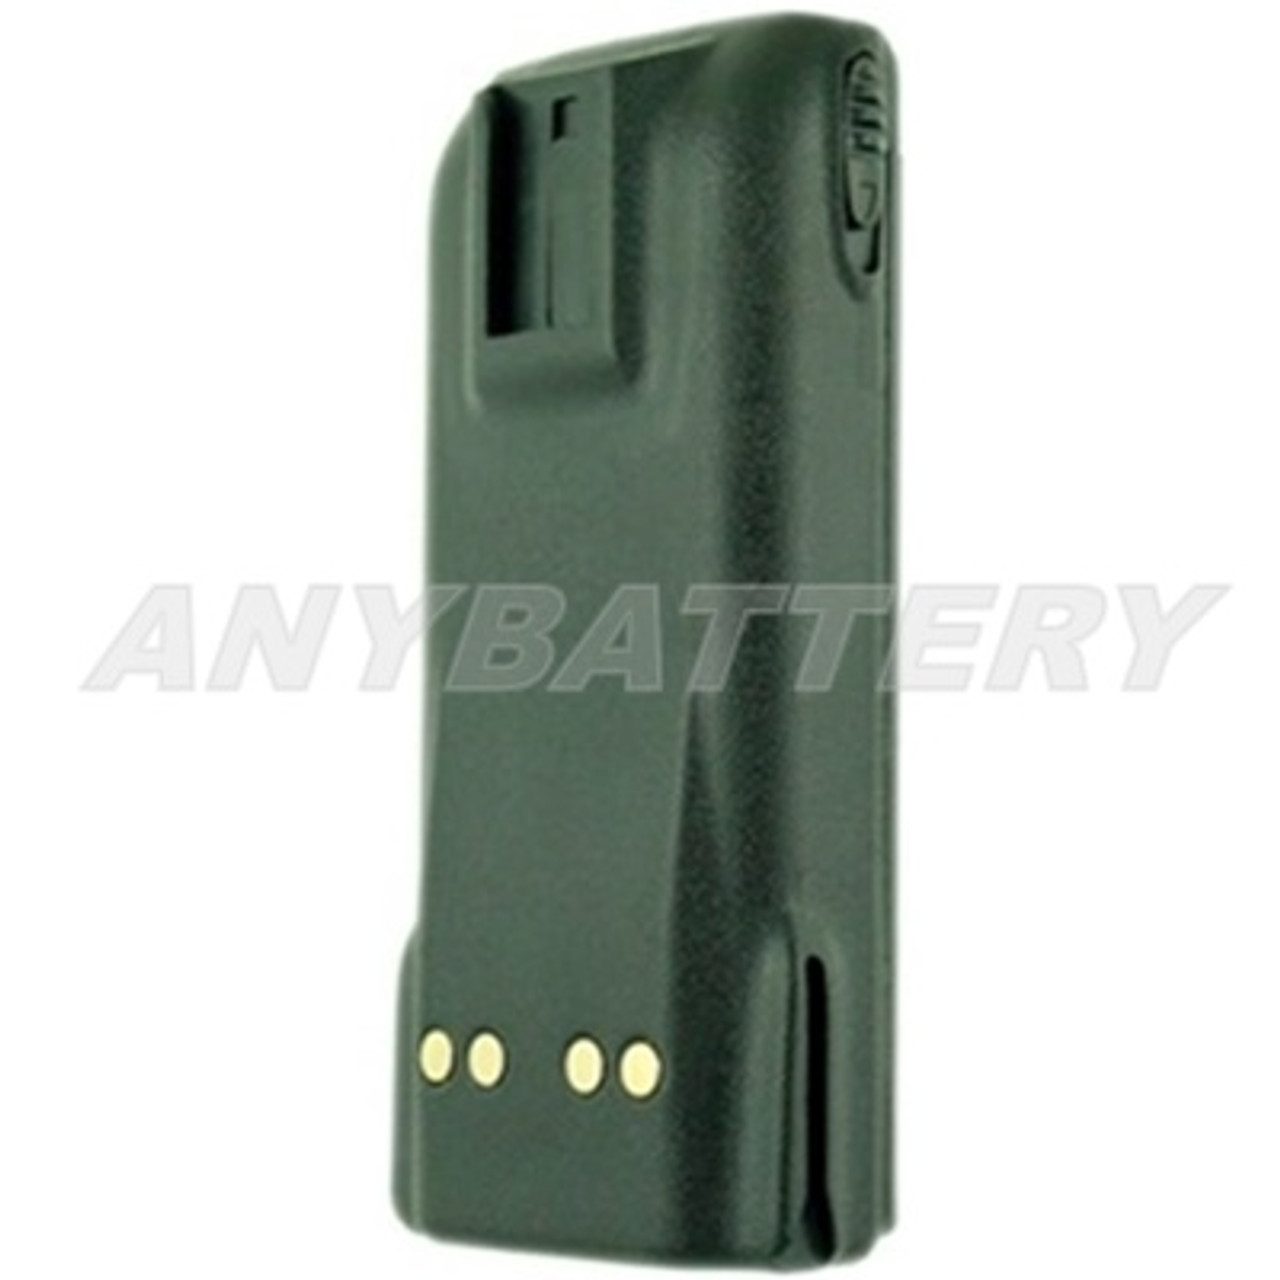 NTN9857 Battery for Motorola XTS1500, XTS2500, MT1500, PR1500 Radios